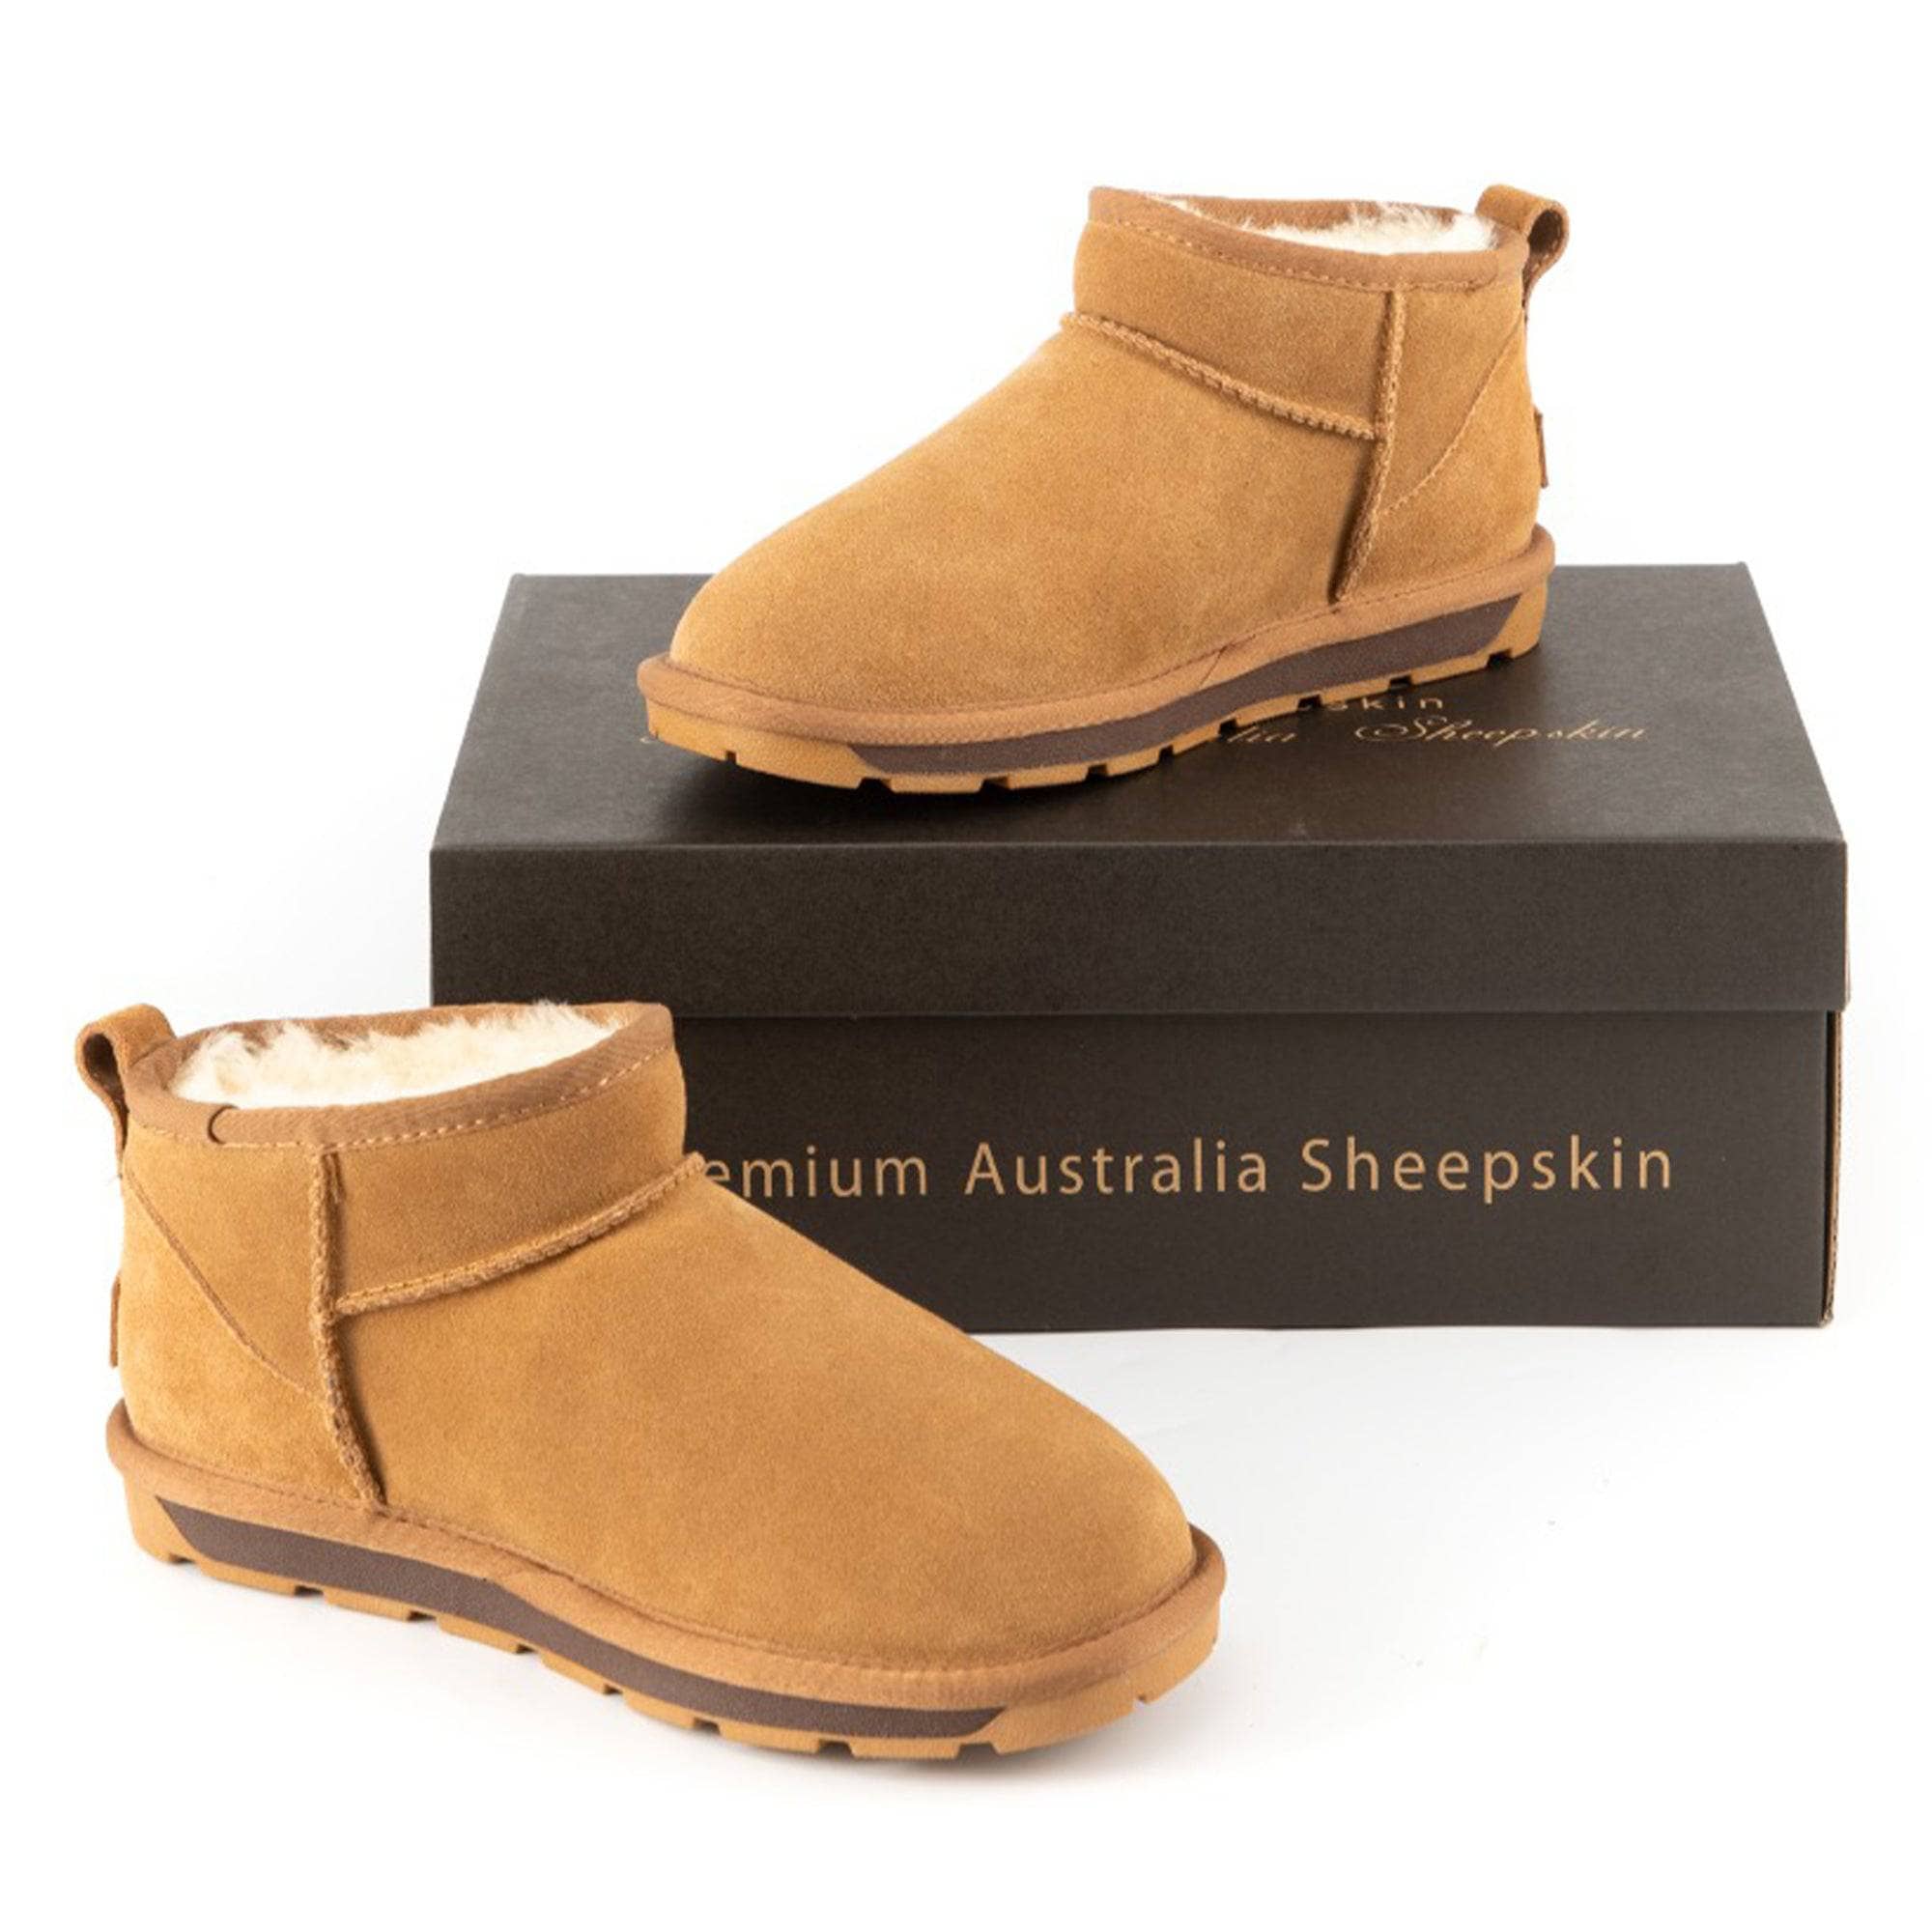 Ugg Boots - UGG Nano Sheepskin Boots - Original UGG Australia Classic